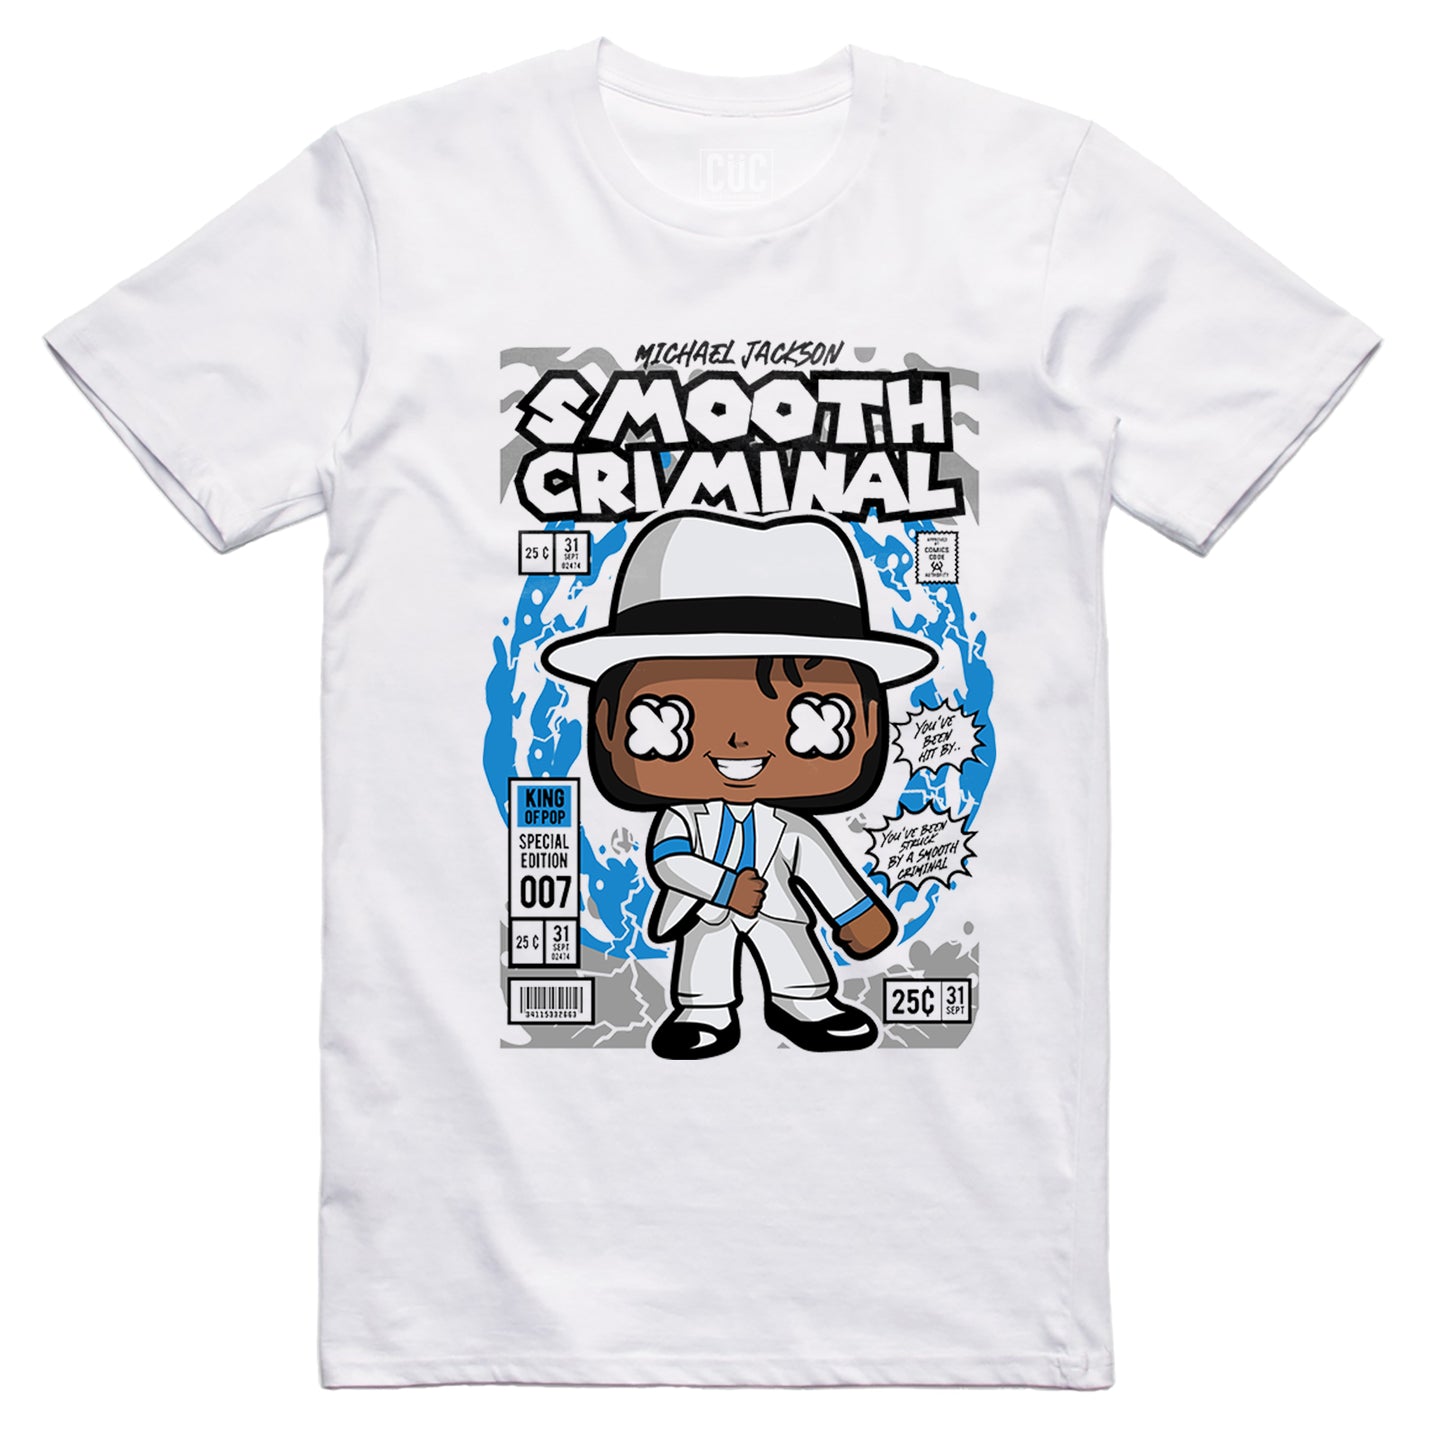 CUC T-Shirt Music Pop Style - Smooth Criminal Jacko- #chooseurcolor - CUC chooseurcolor